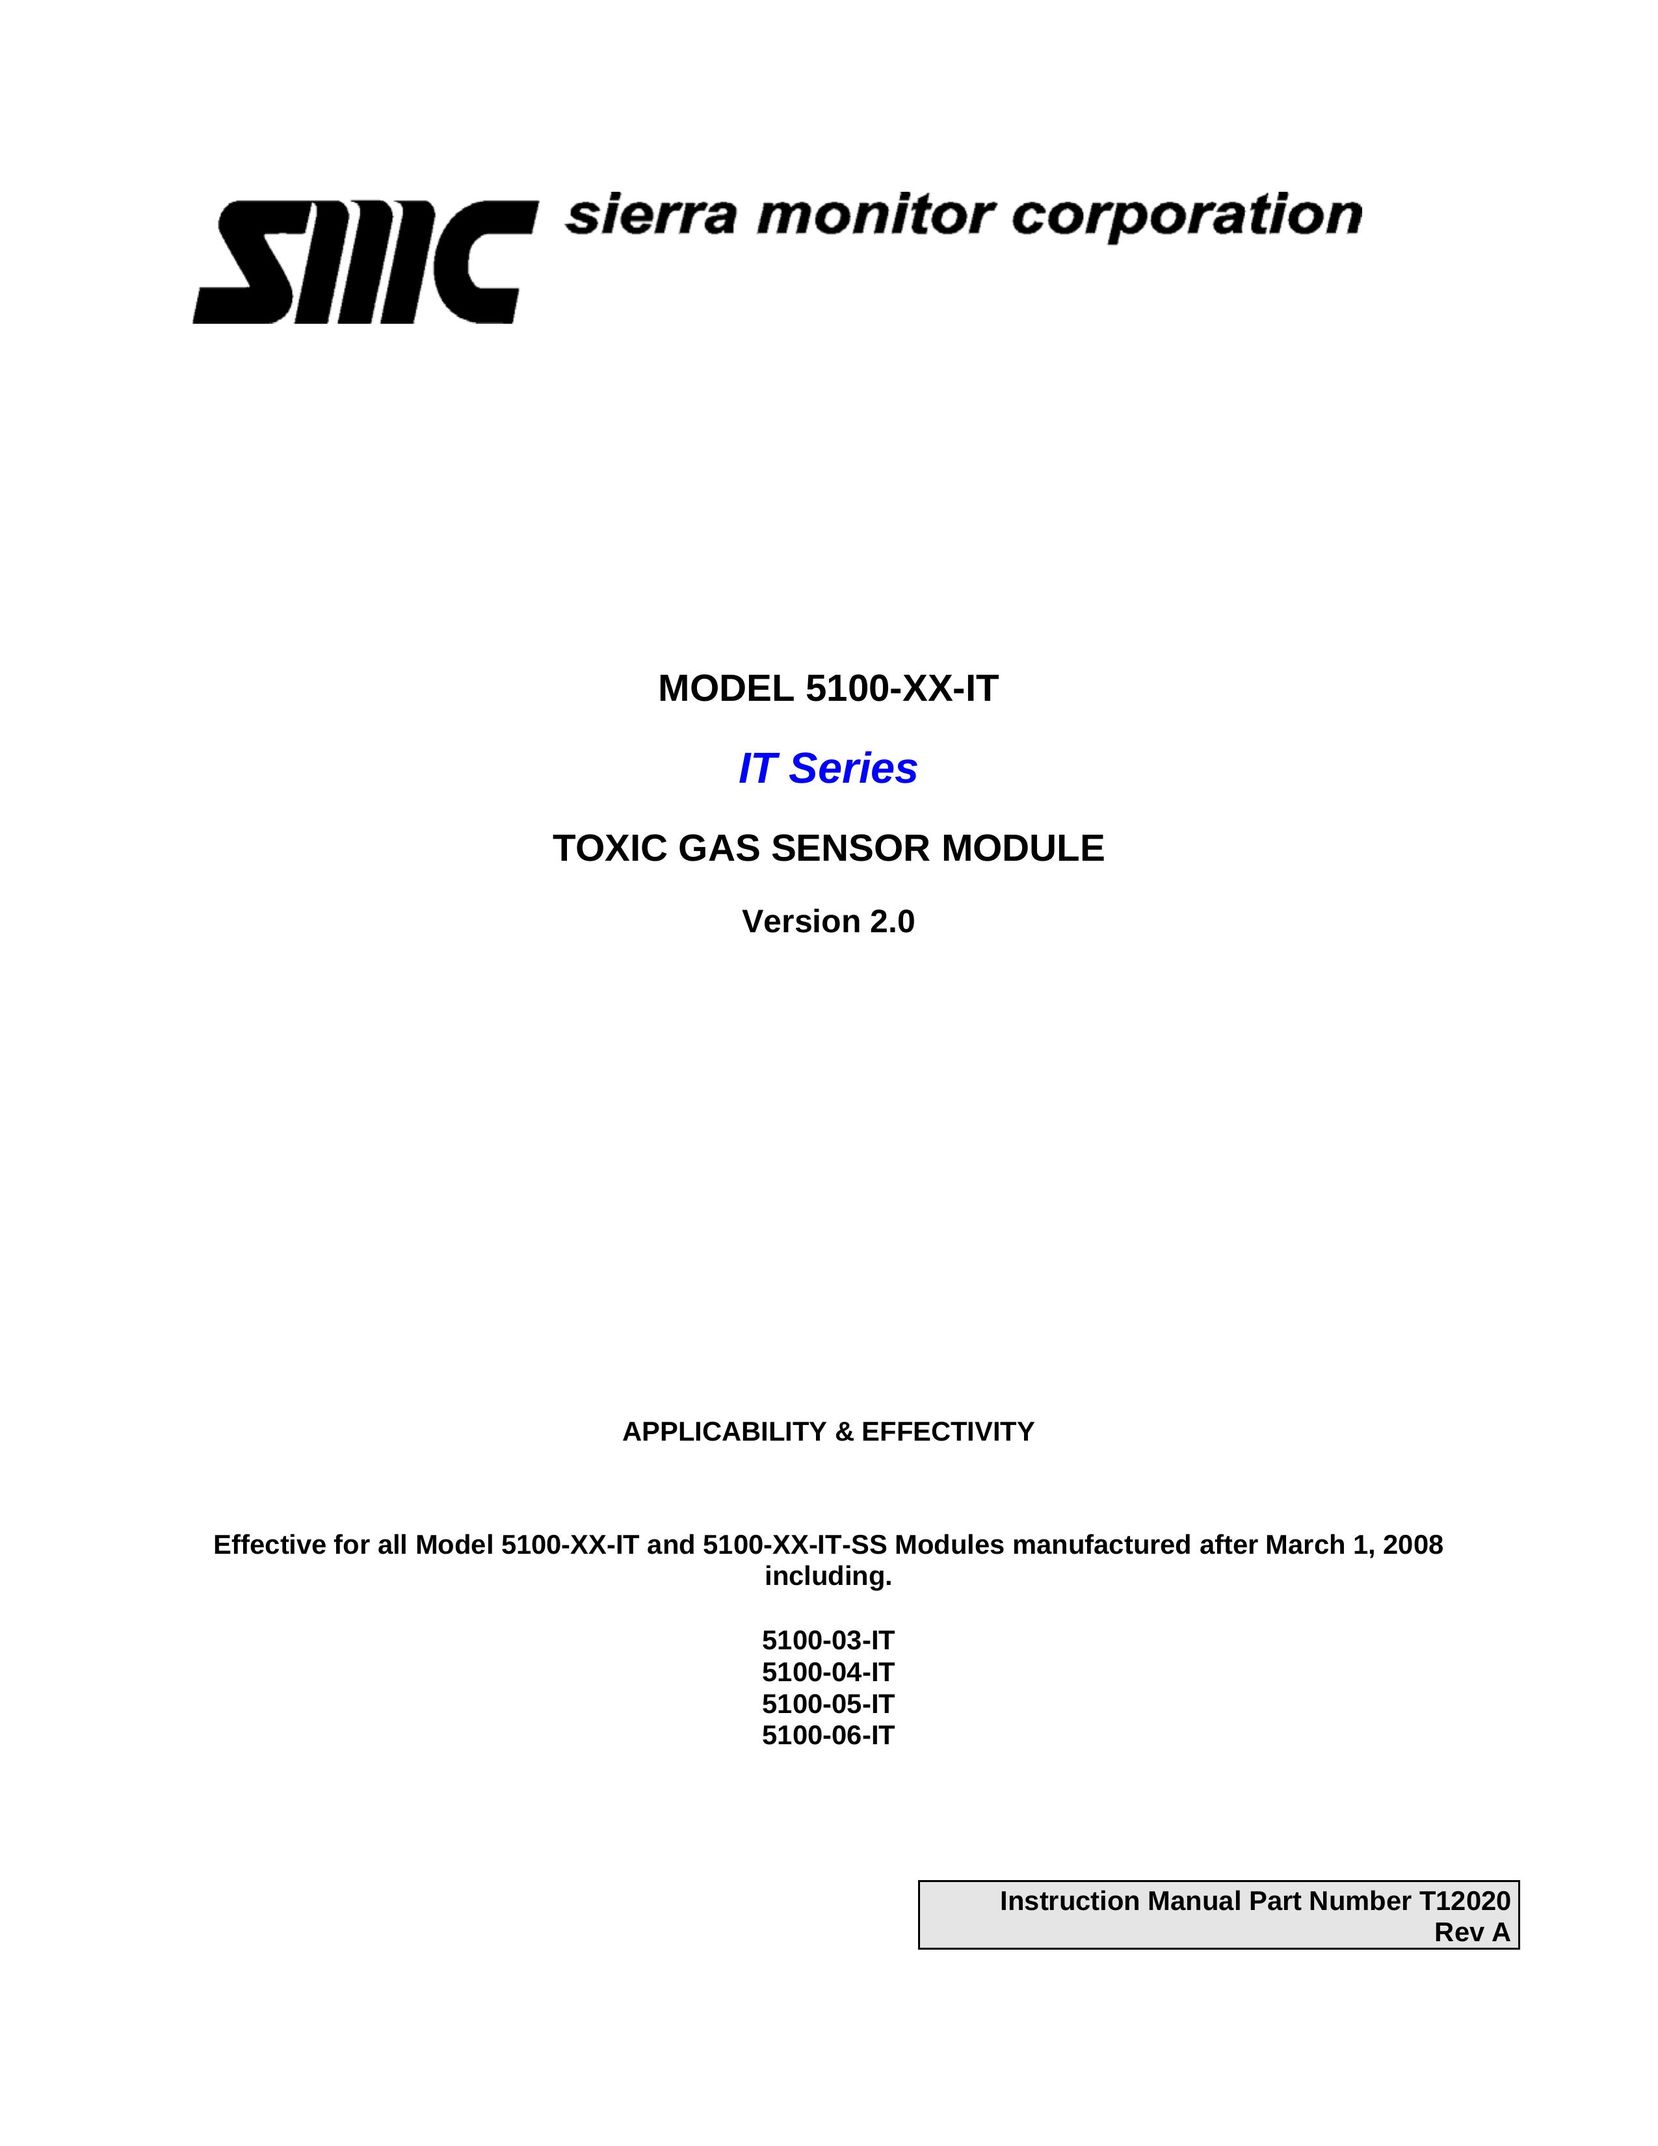 Sierra Monitor Corporation 5100-06-IT Carbon Monoxide Alarm User Manual